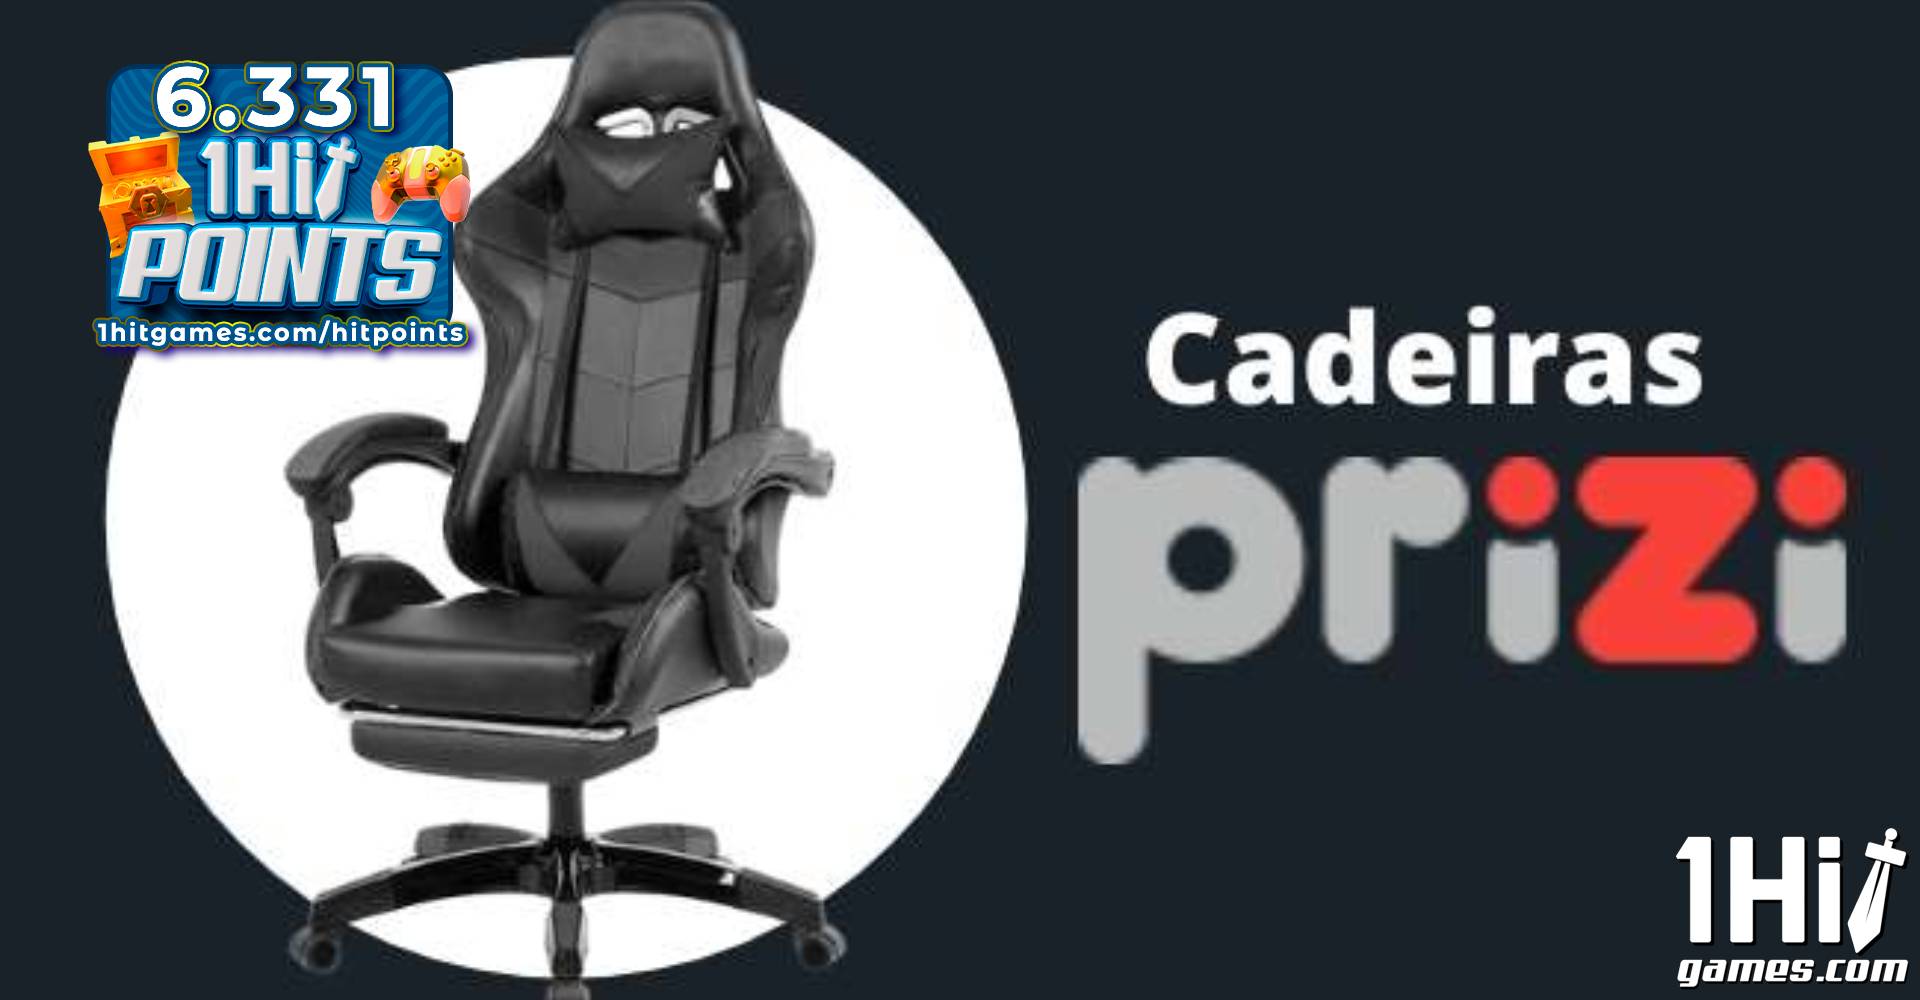 Cadeira Gamer Prizi Infinity